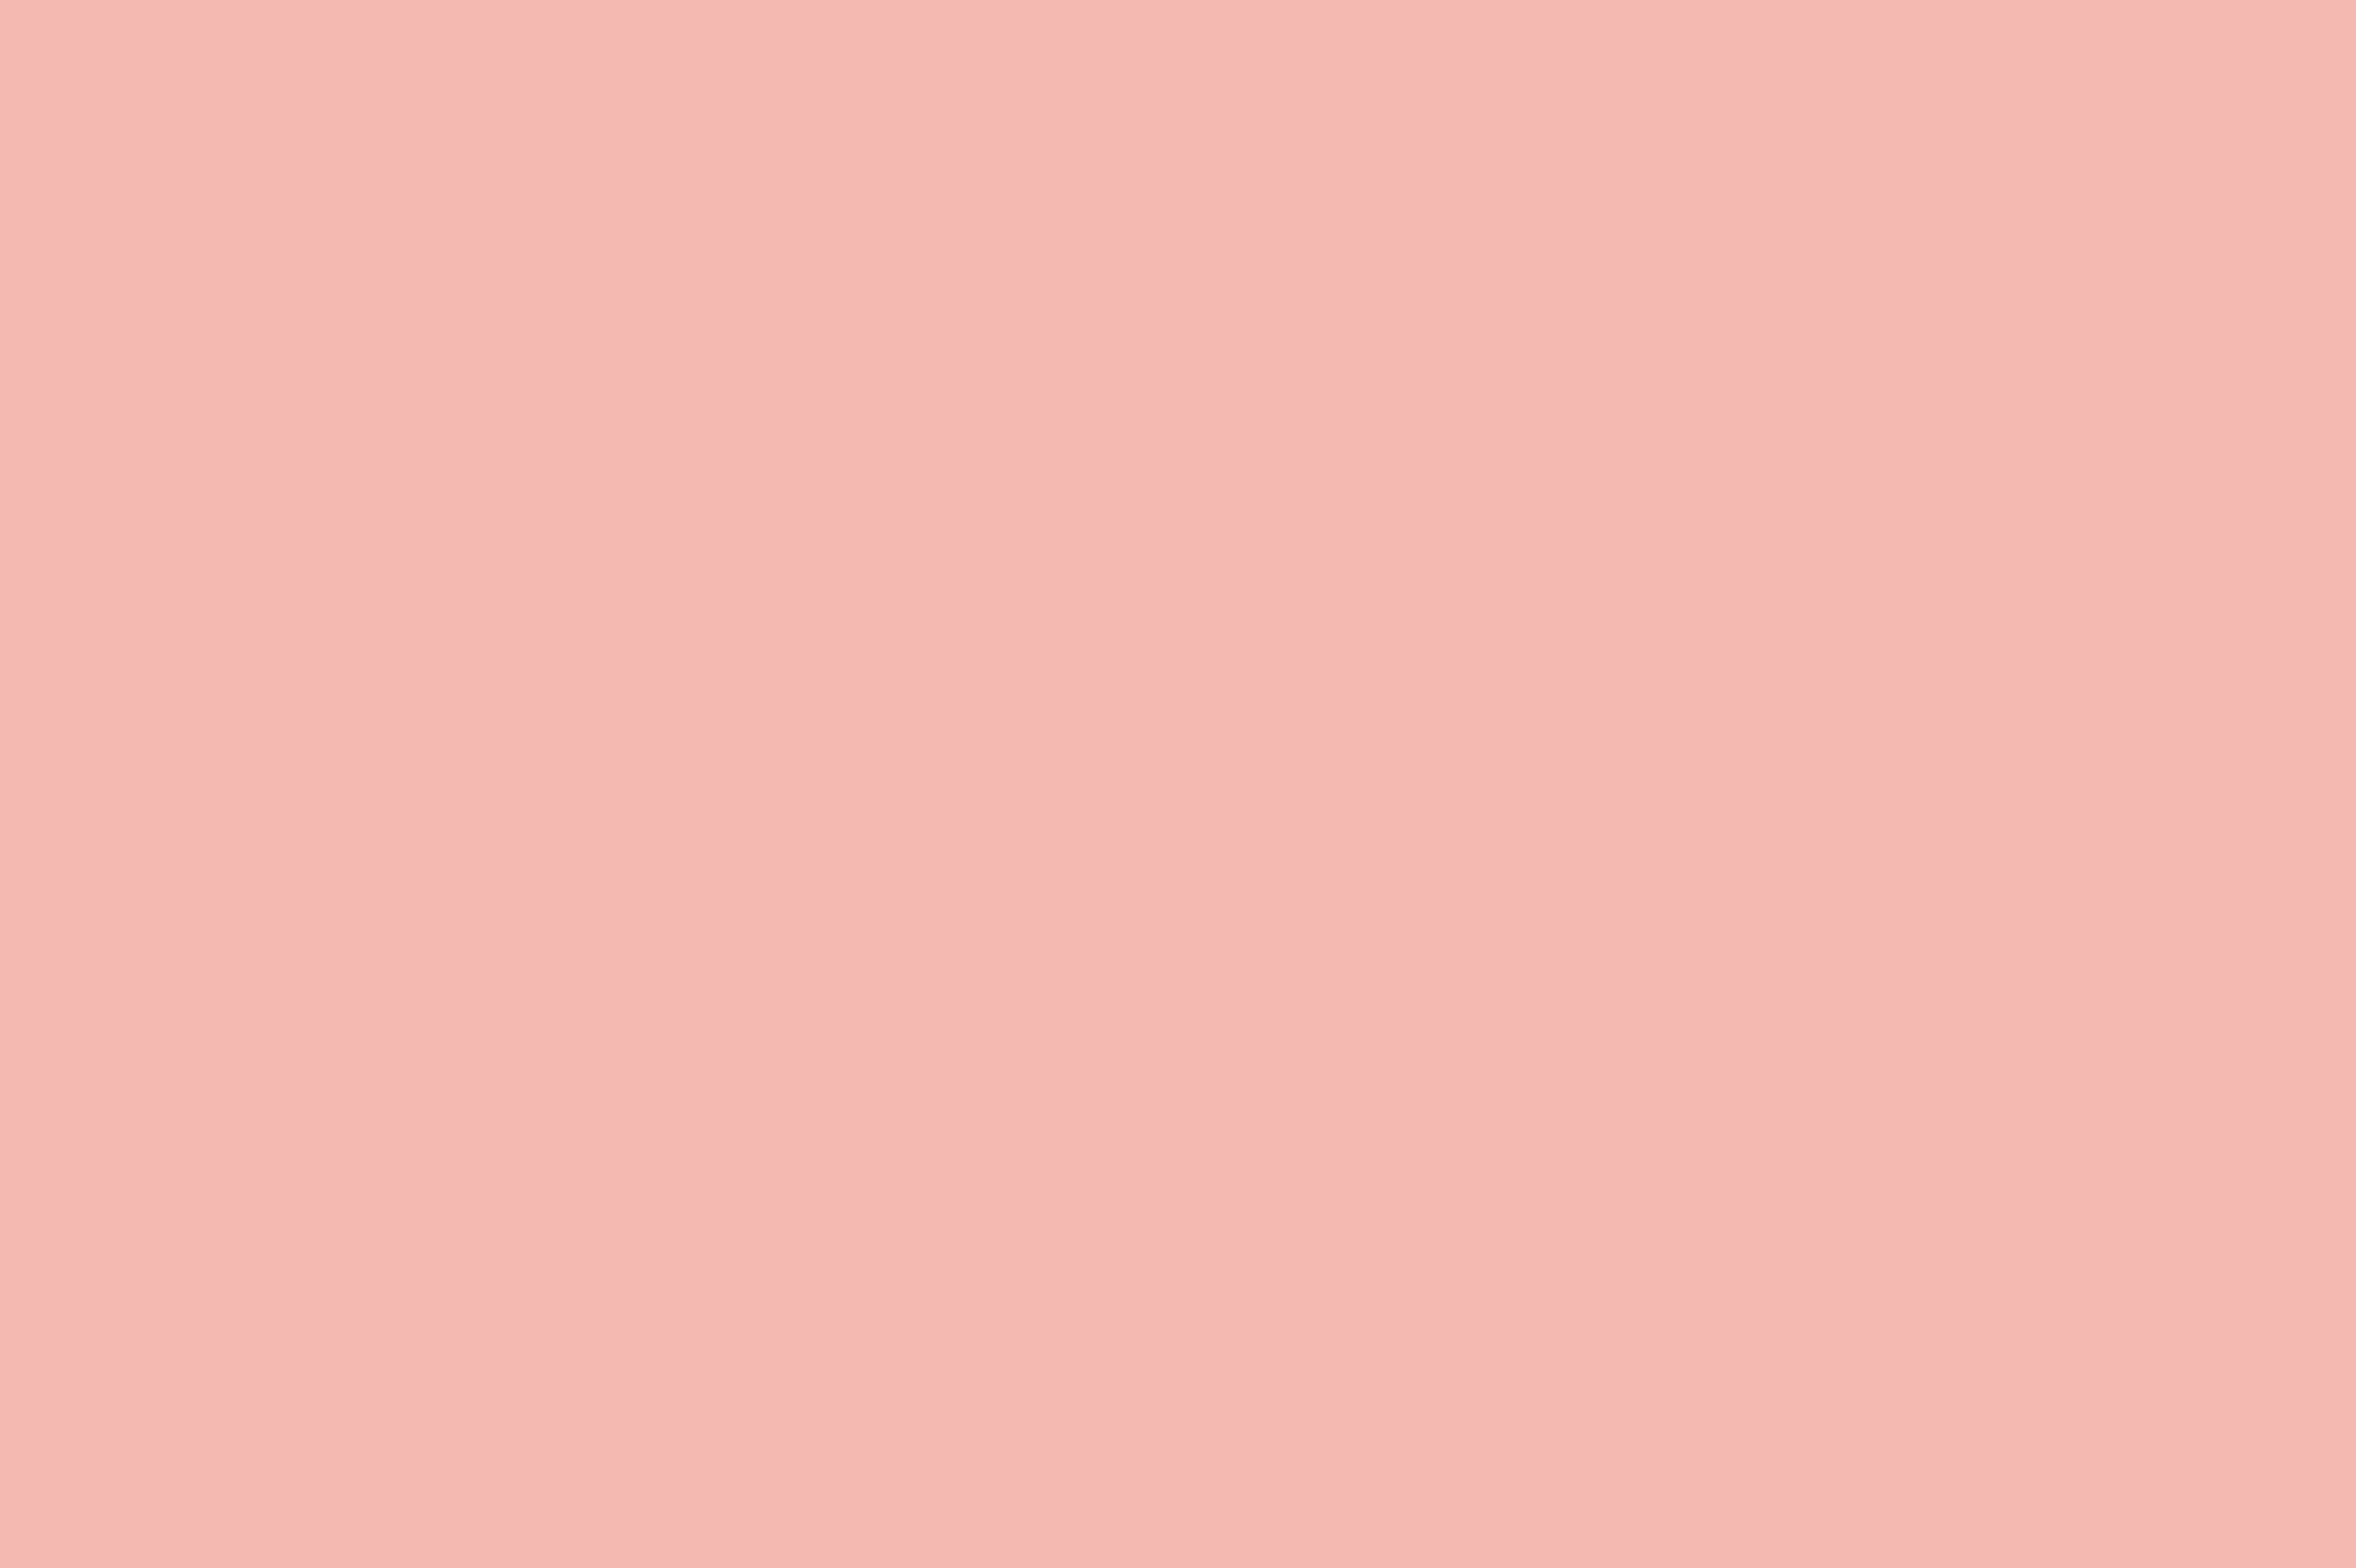 Puck Solid Baby Pink Digital Backdrop Background Jpg Sincerely